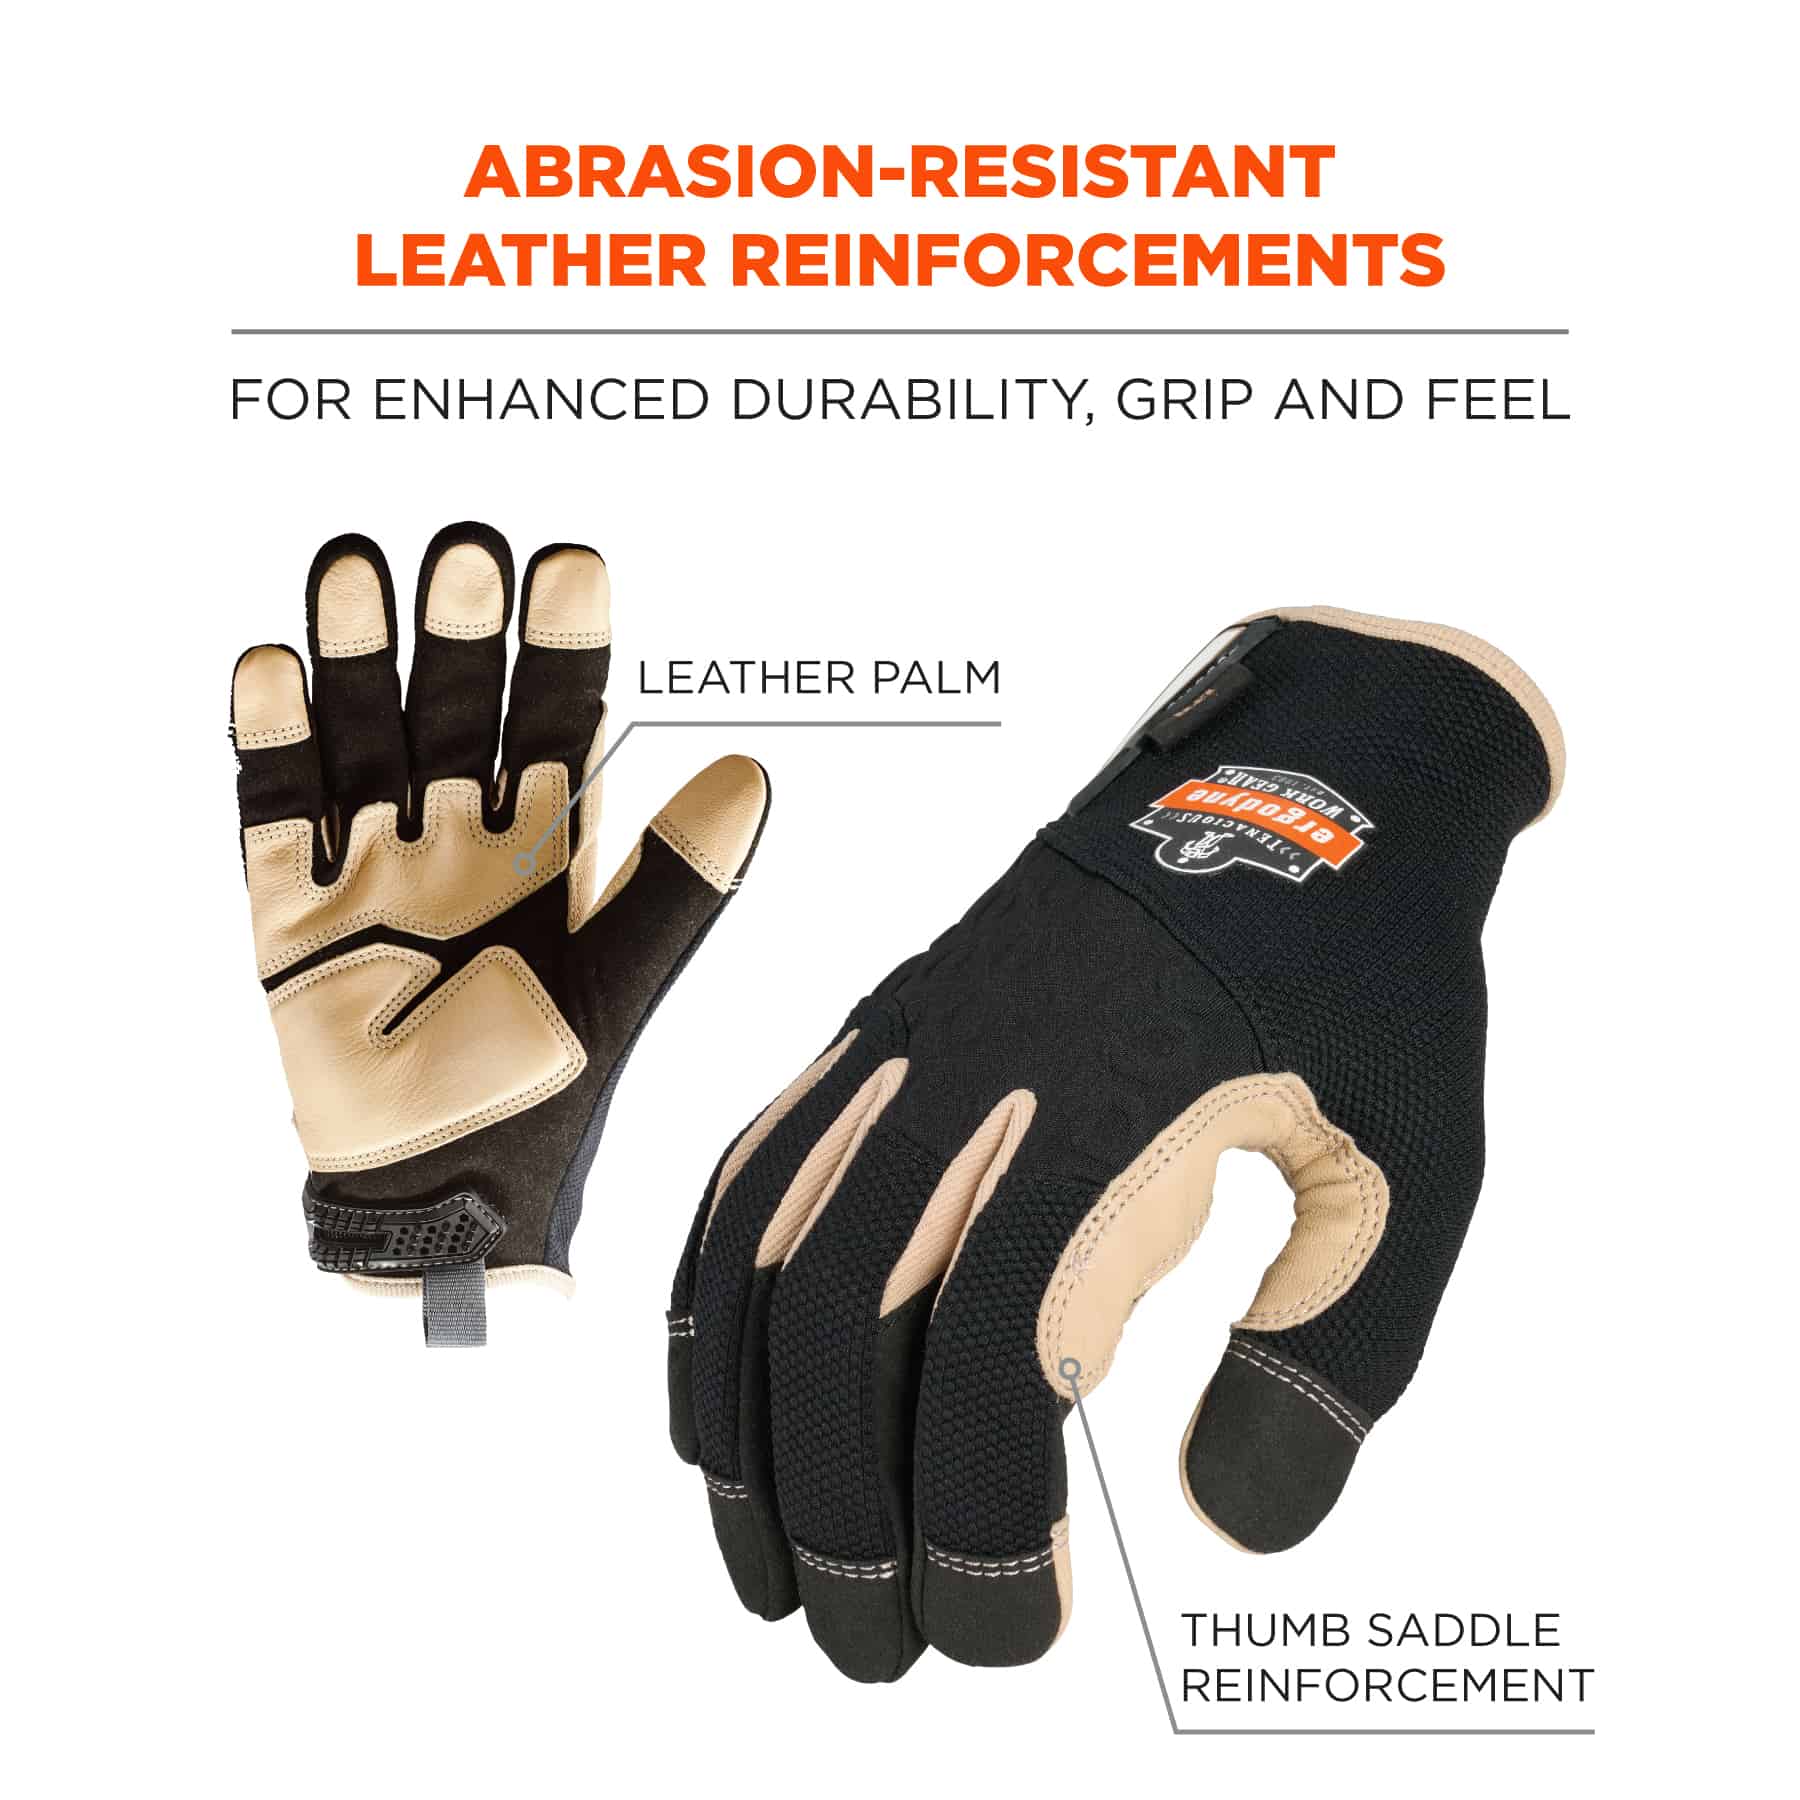 https://www.ergodyne.com/sites/default/files/product-images/17142-710ltr-heavy-duty-work-gloves-abrasion-resistant-leather-reinforcements.jpg